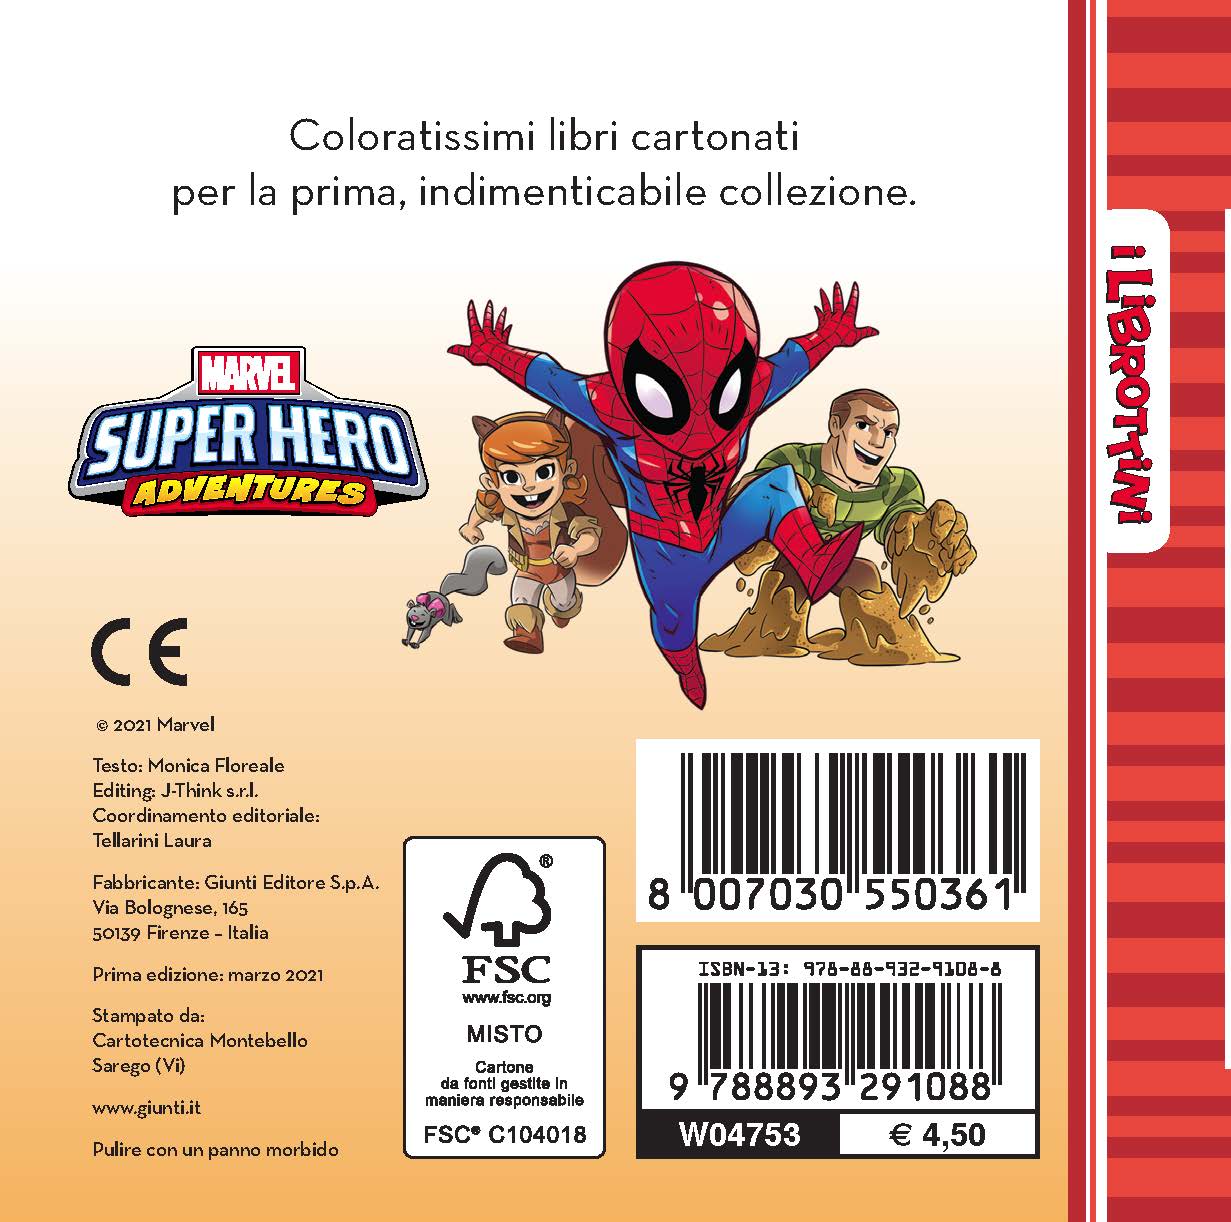 Spiderman e l'uomo sabbia - I Librottini::Marvel Super Hero Adventures